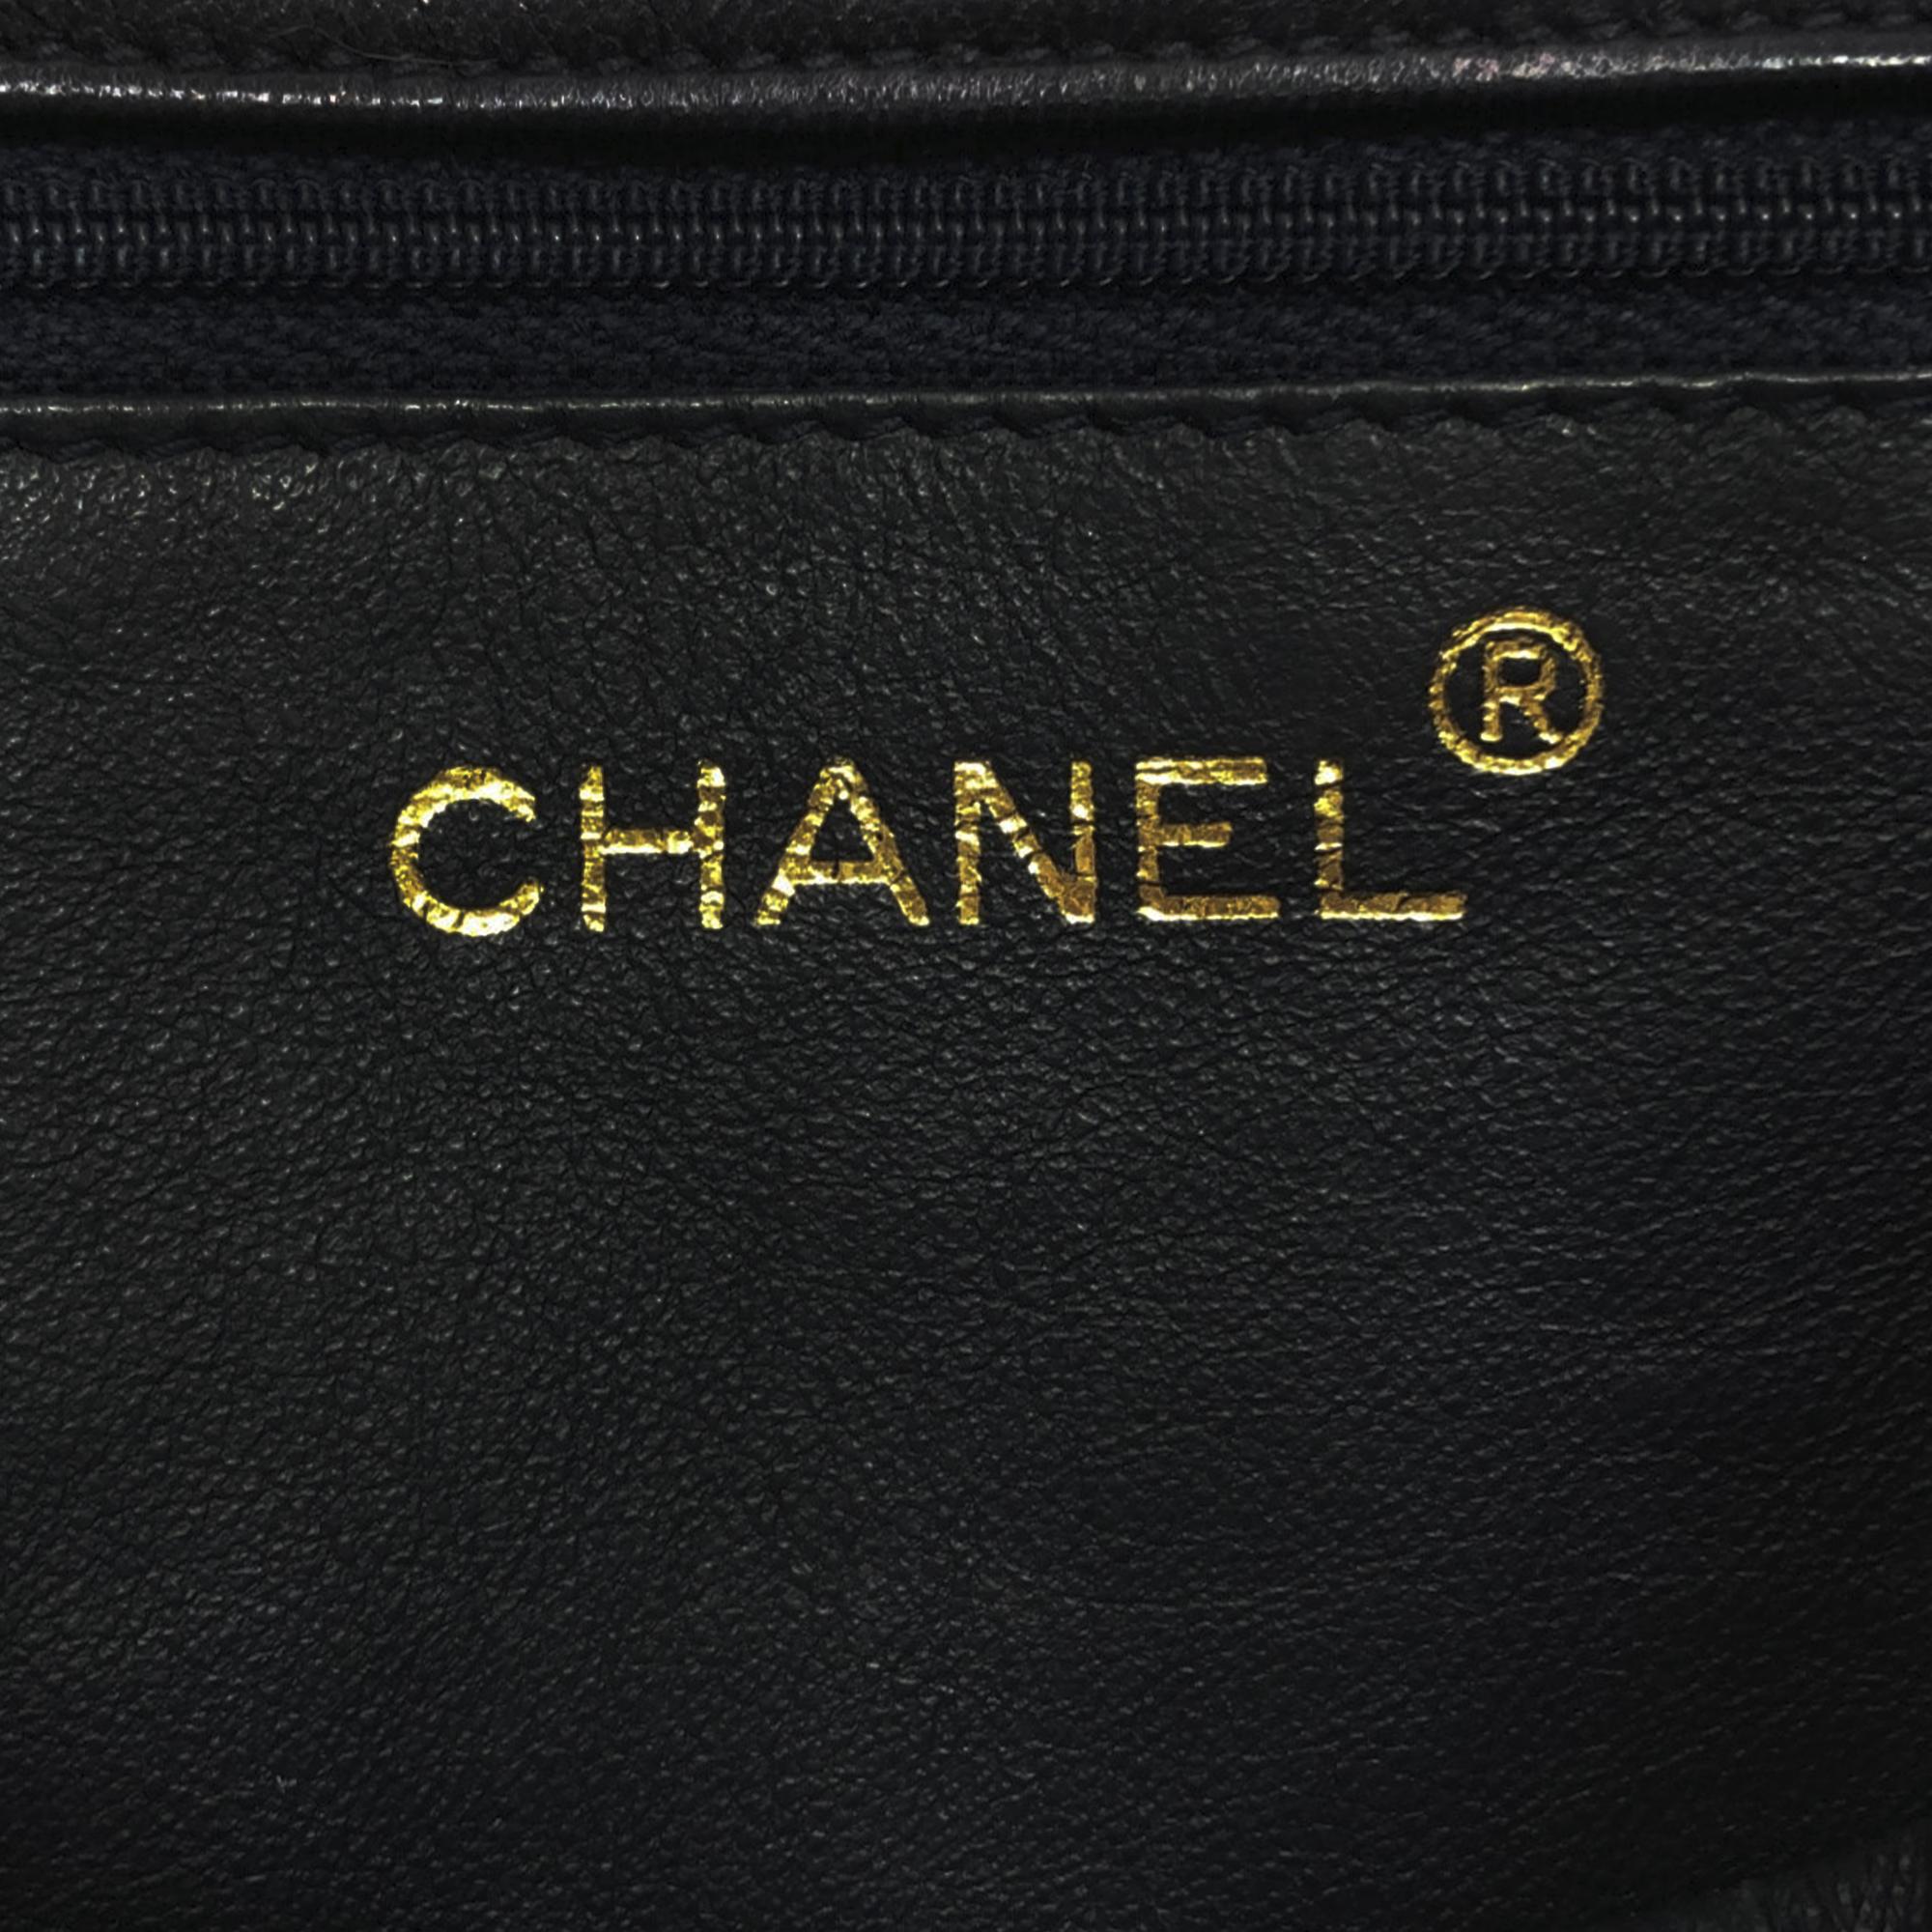 Chanel Black CC Matelasse Tassel Flap Crossbody Bag